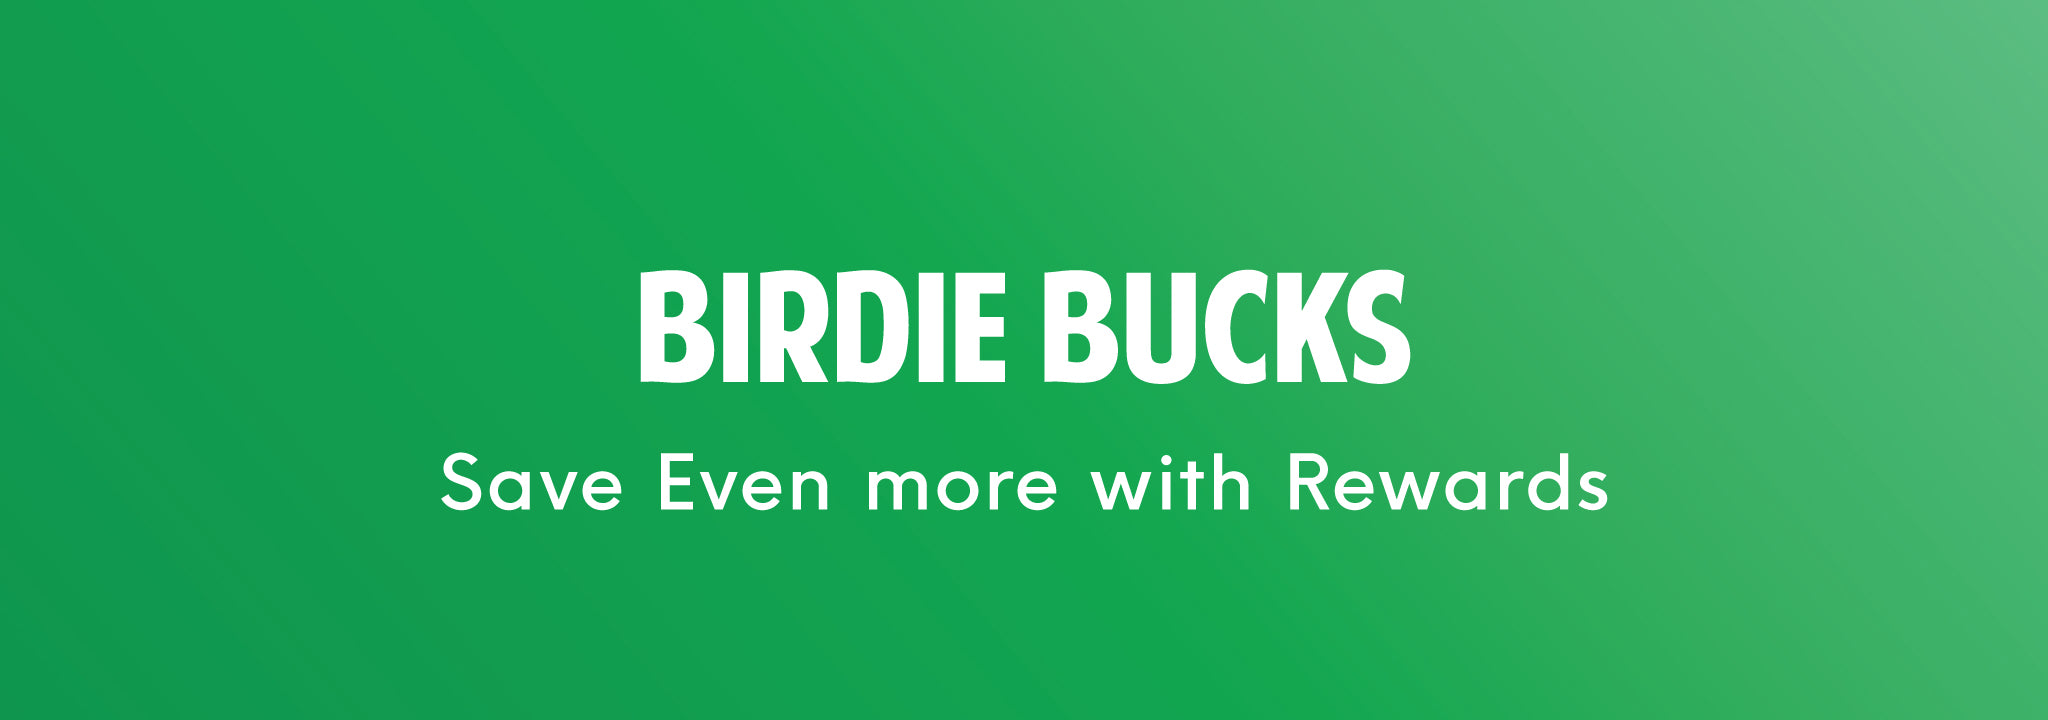 Birdie Bucks - Rewards Program